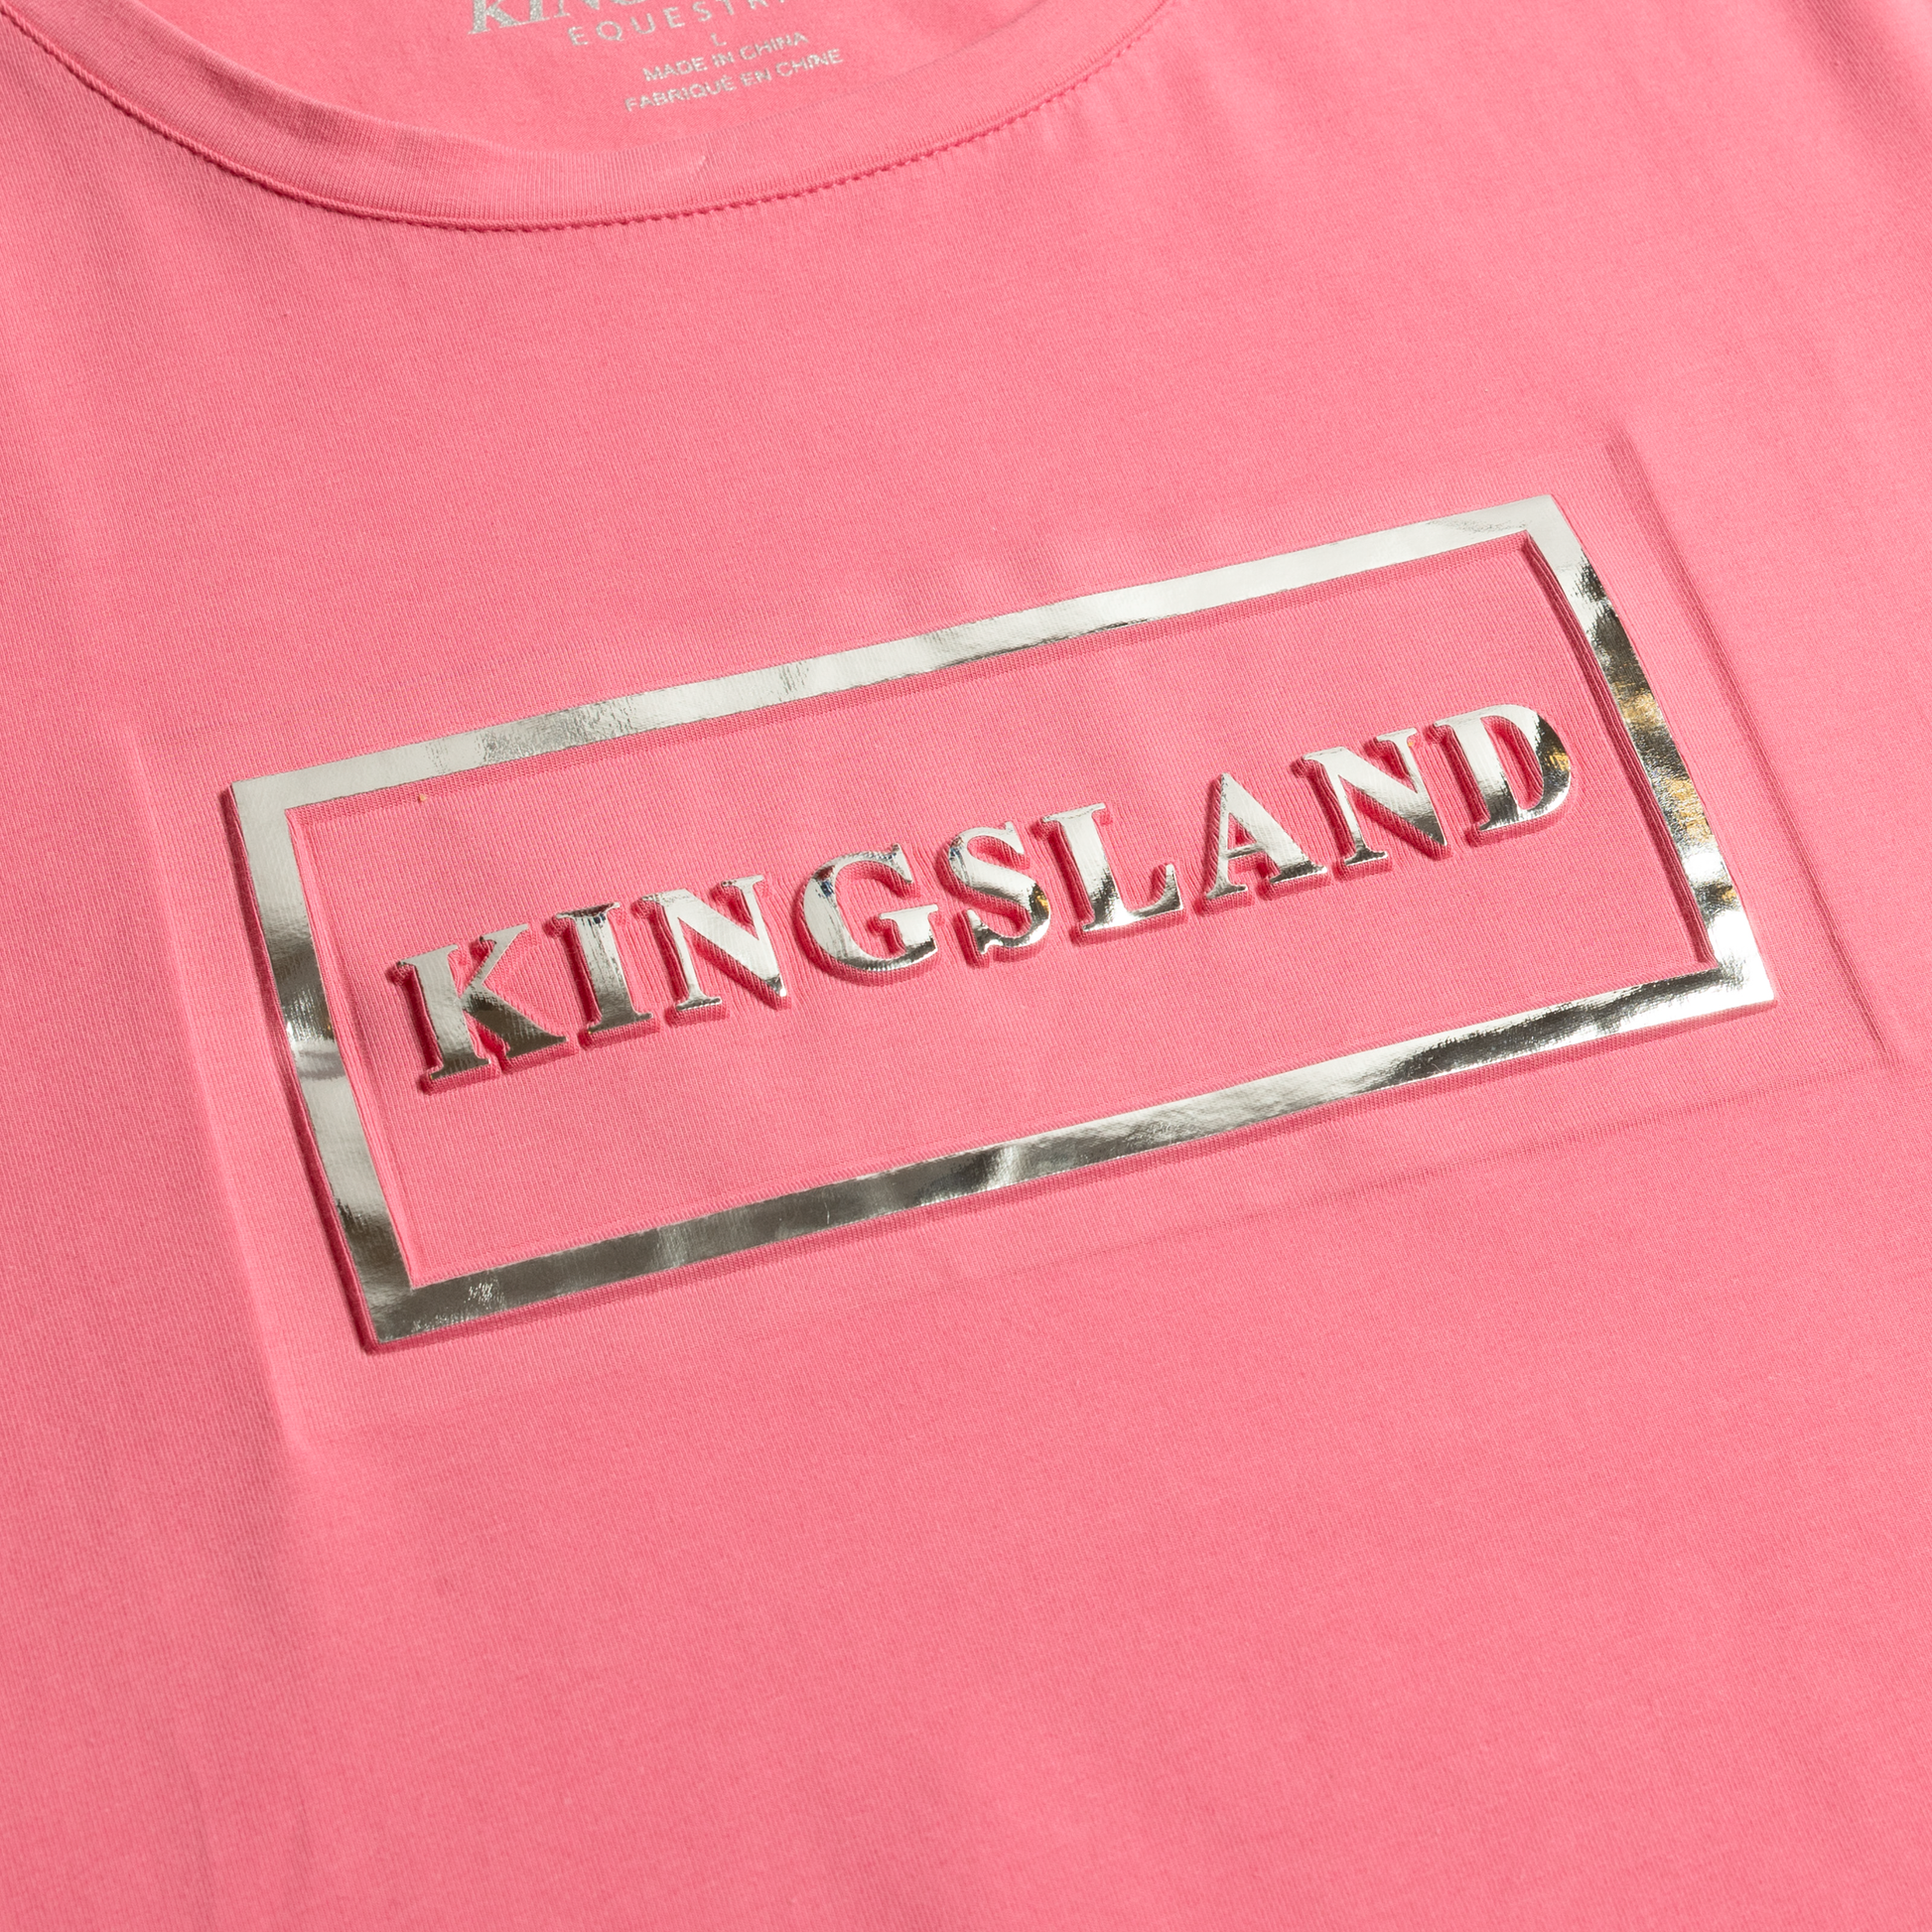 Kingsland Equstrian Riding Clement Junior T-shirt pink rose